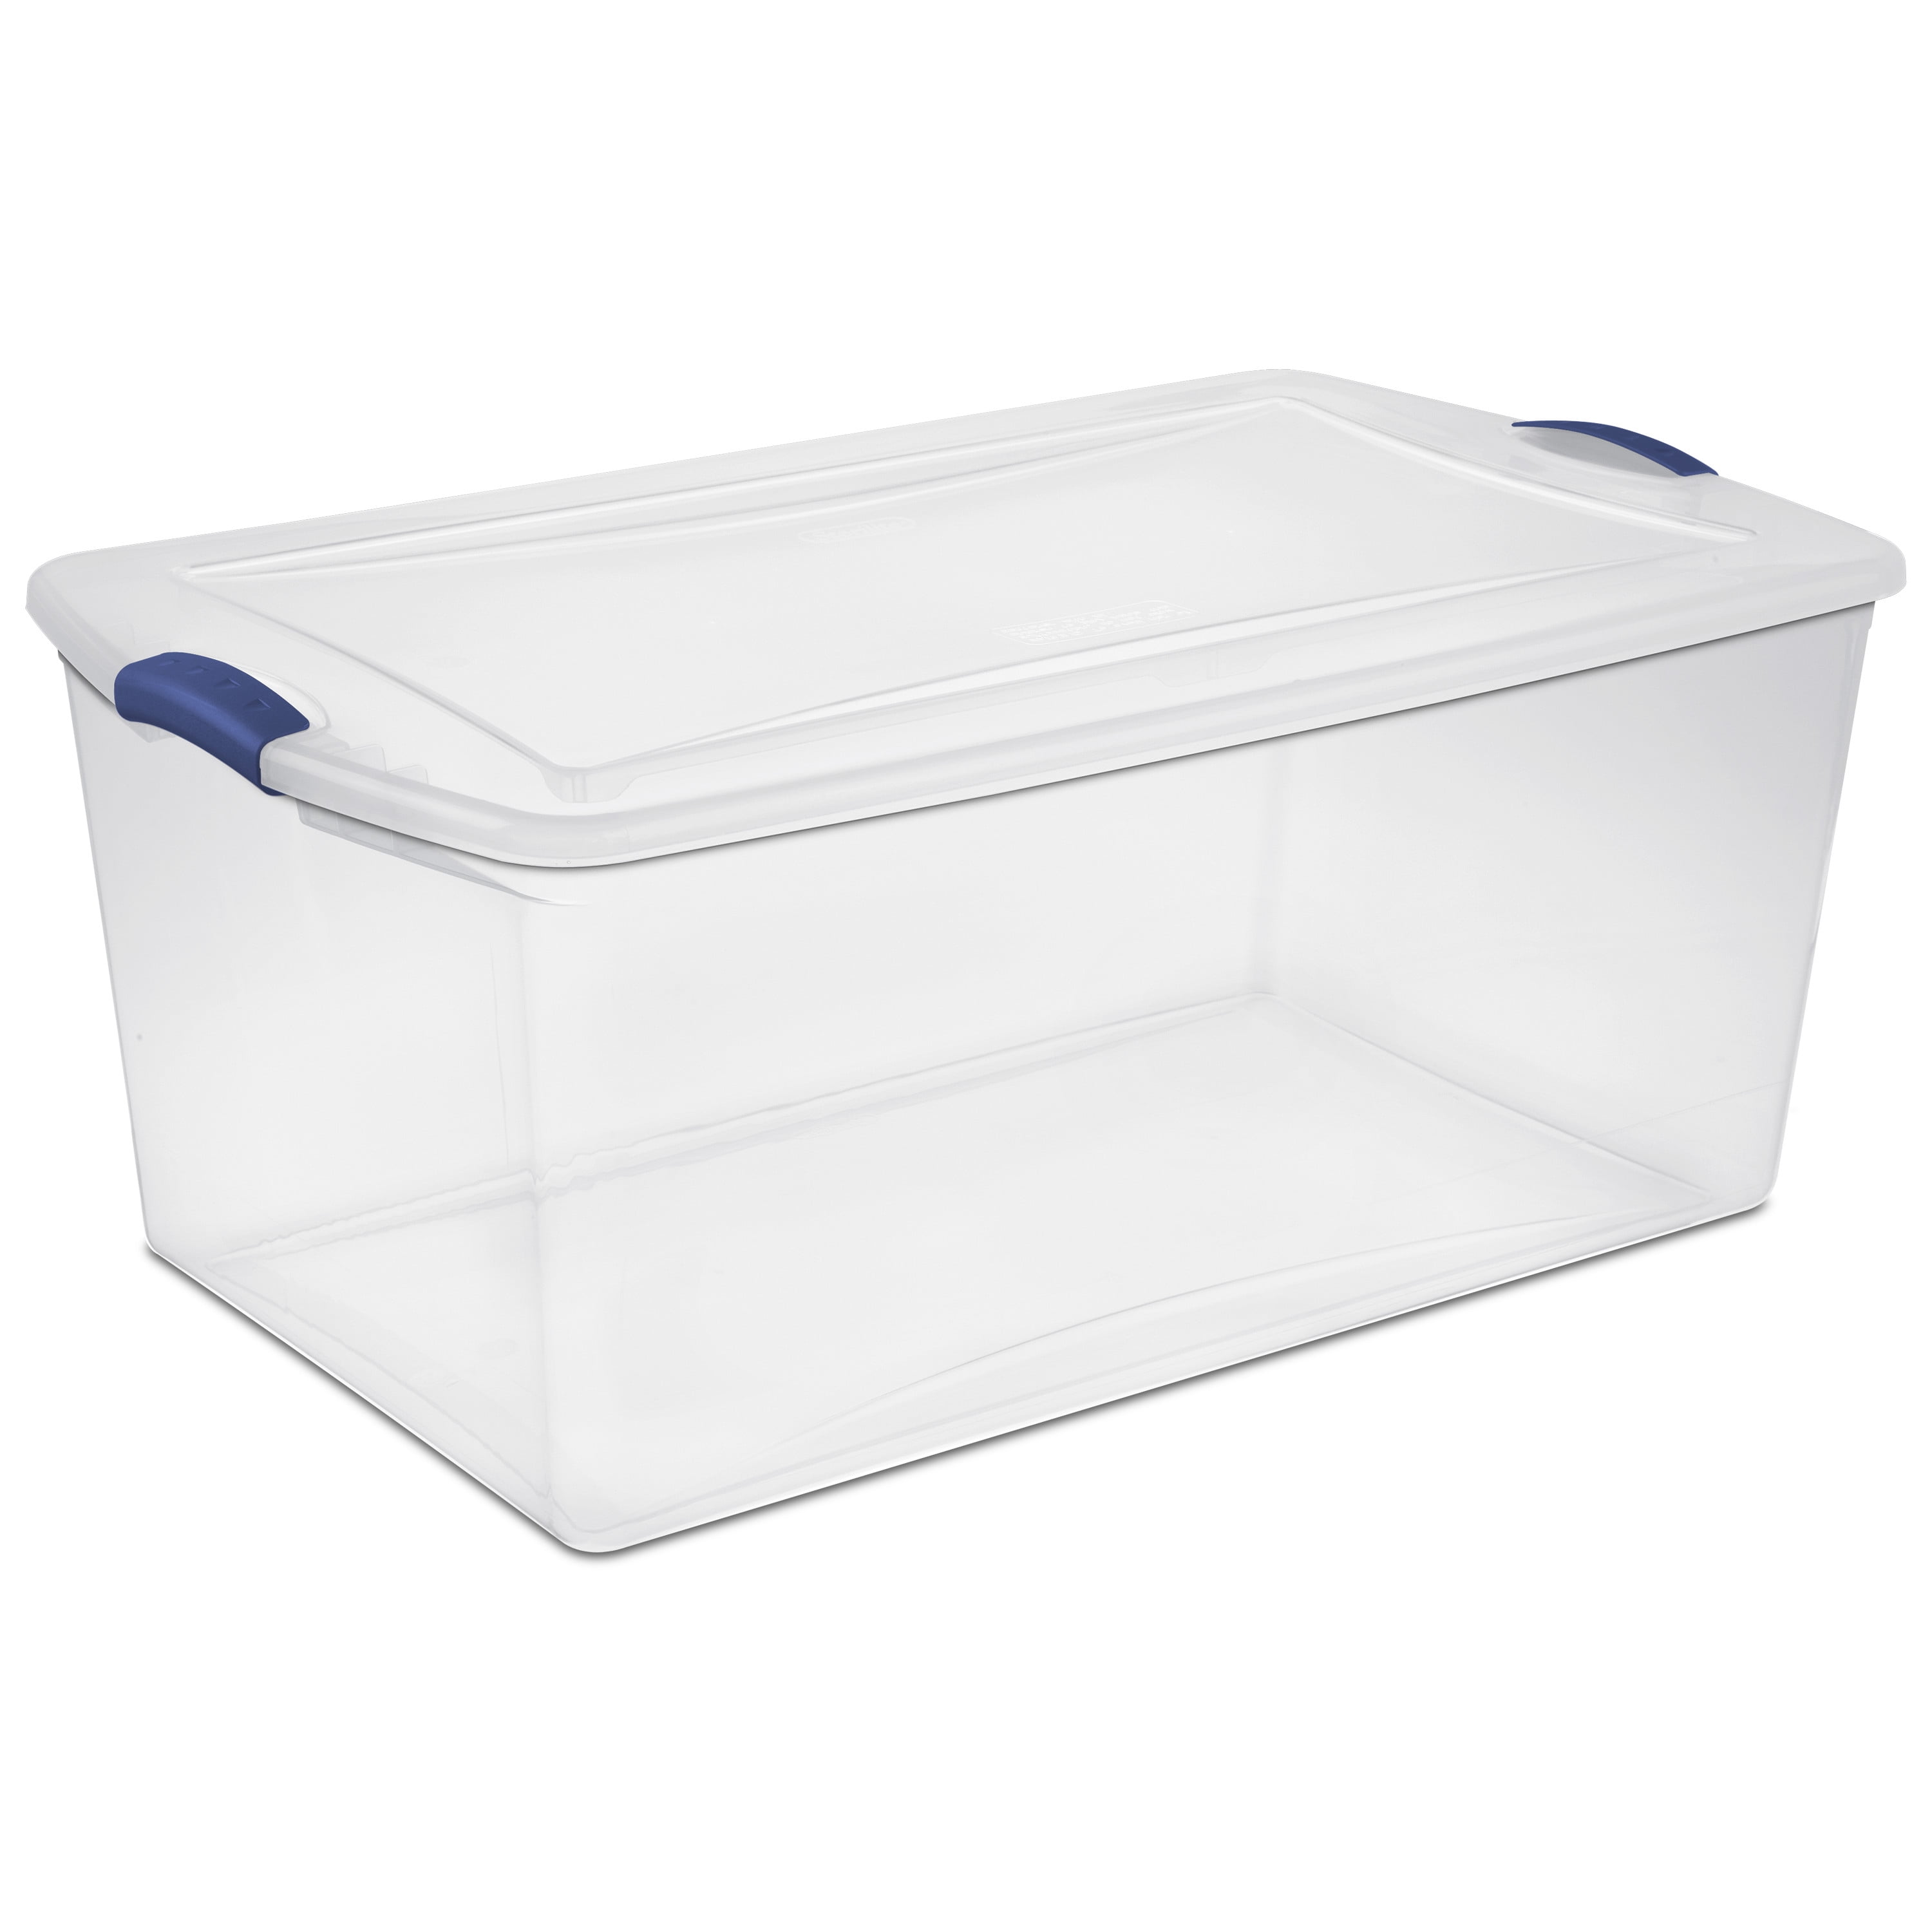 Latch Box 105 Qt Stadium Blue Box Storage Container Bins Plastic Pale Case of 4 